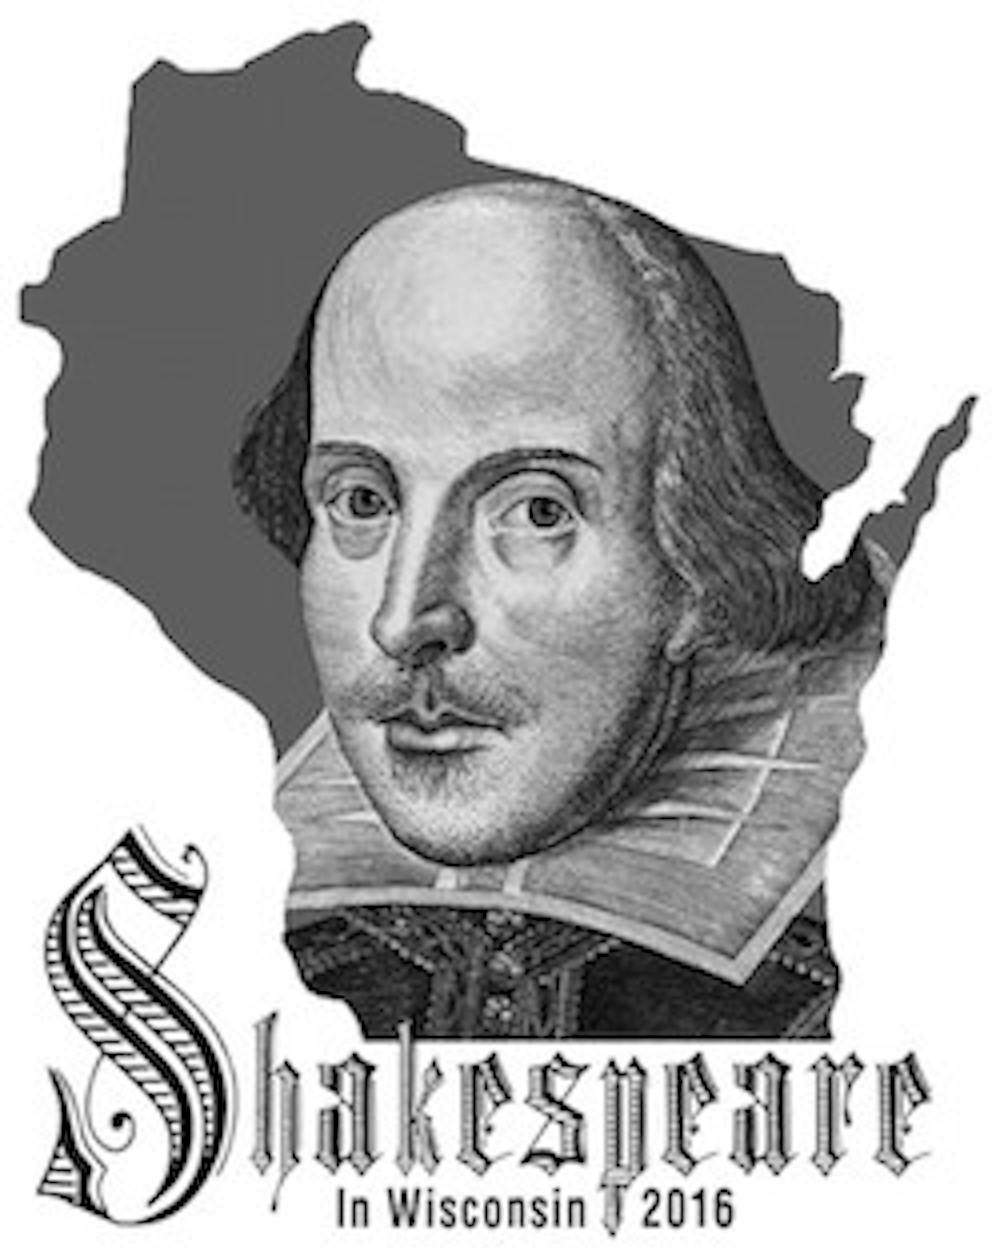 UW-Madison will celebrate Shakespeare's work throughout 2016.